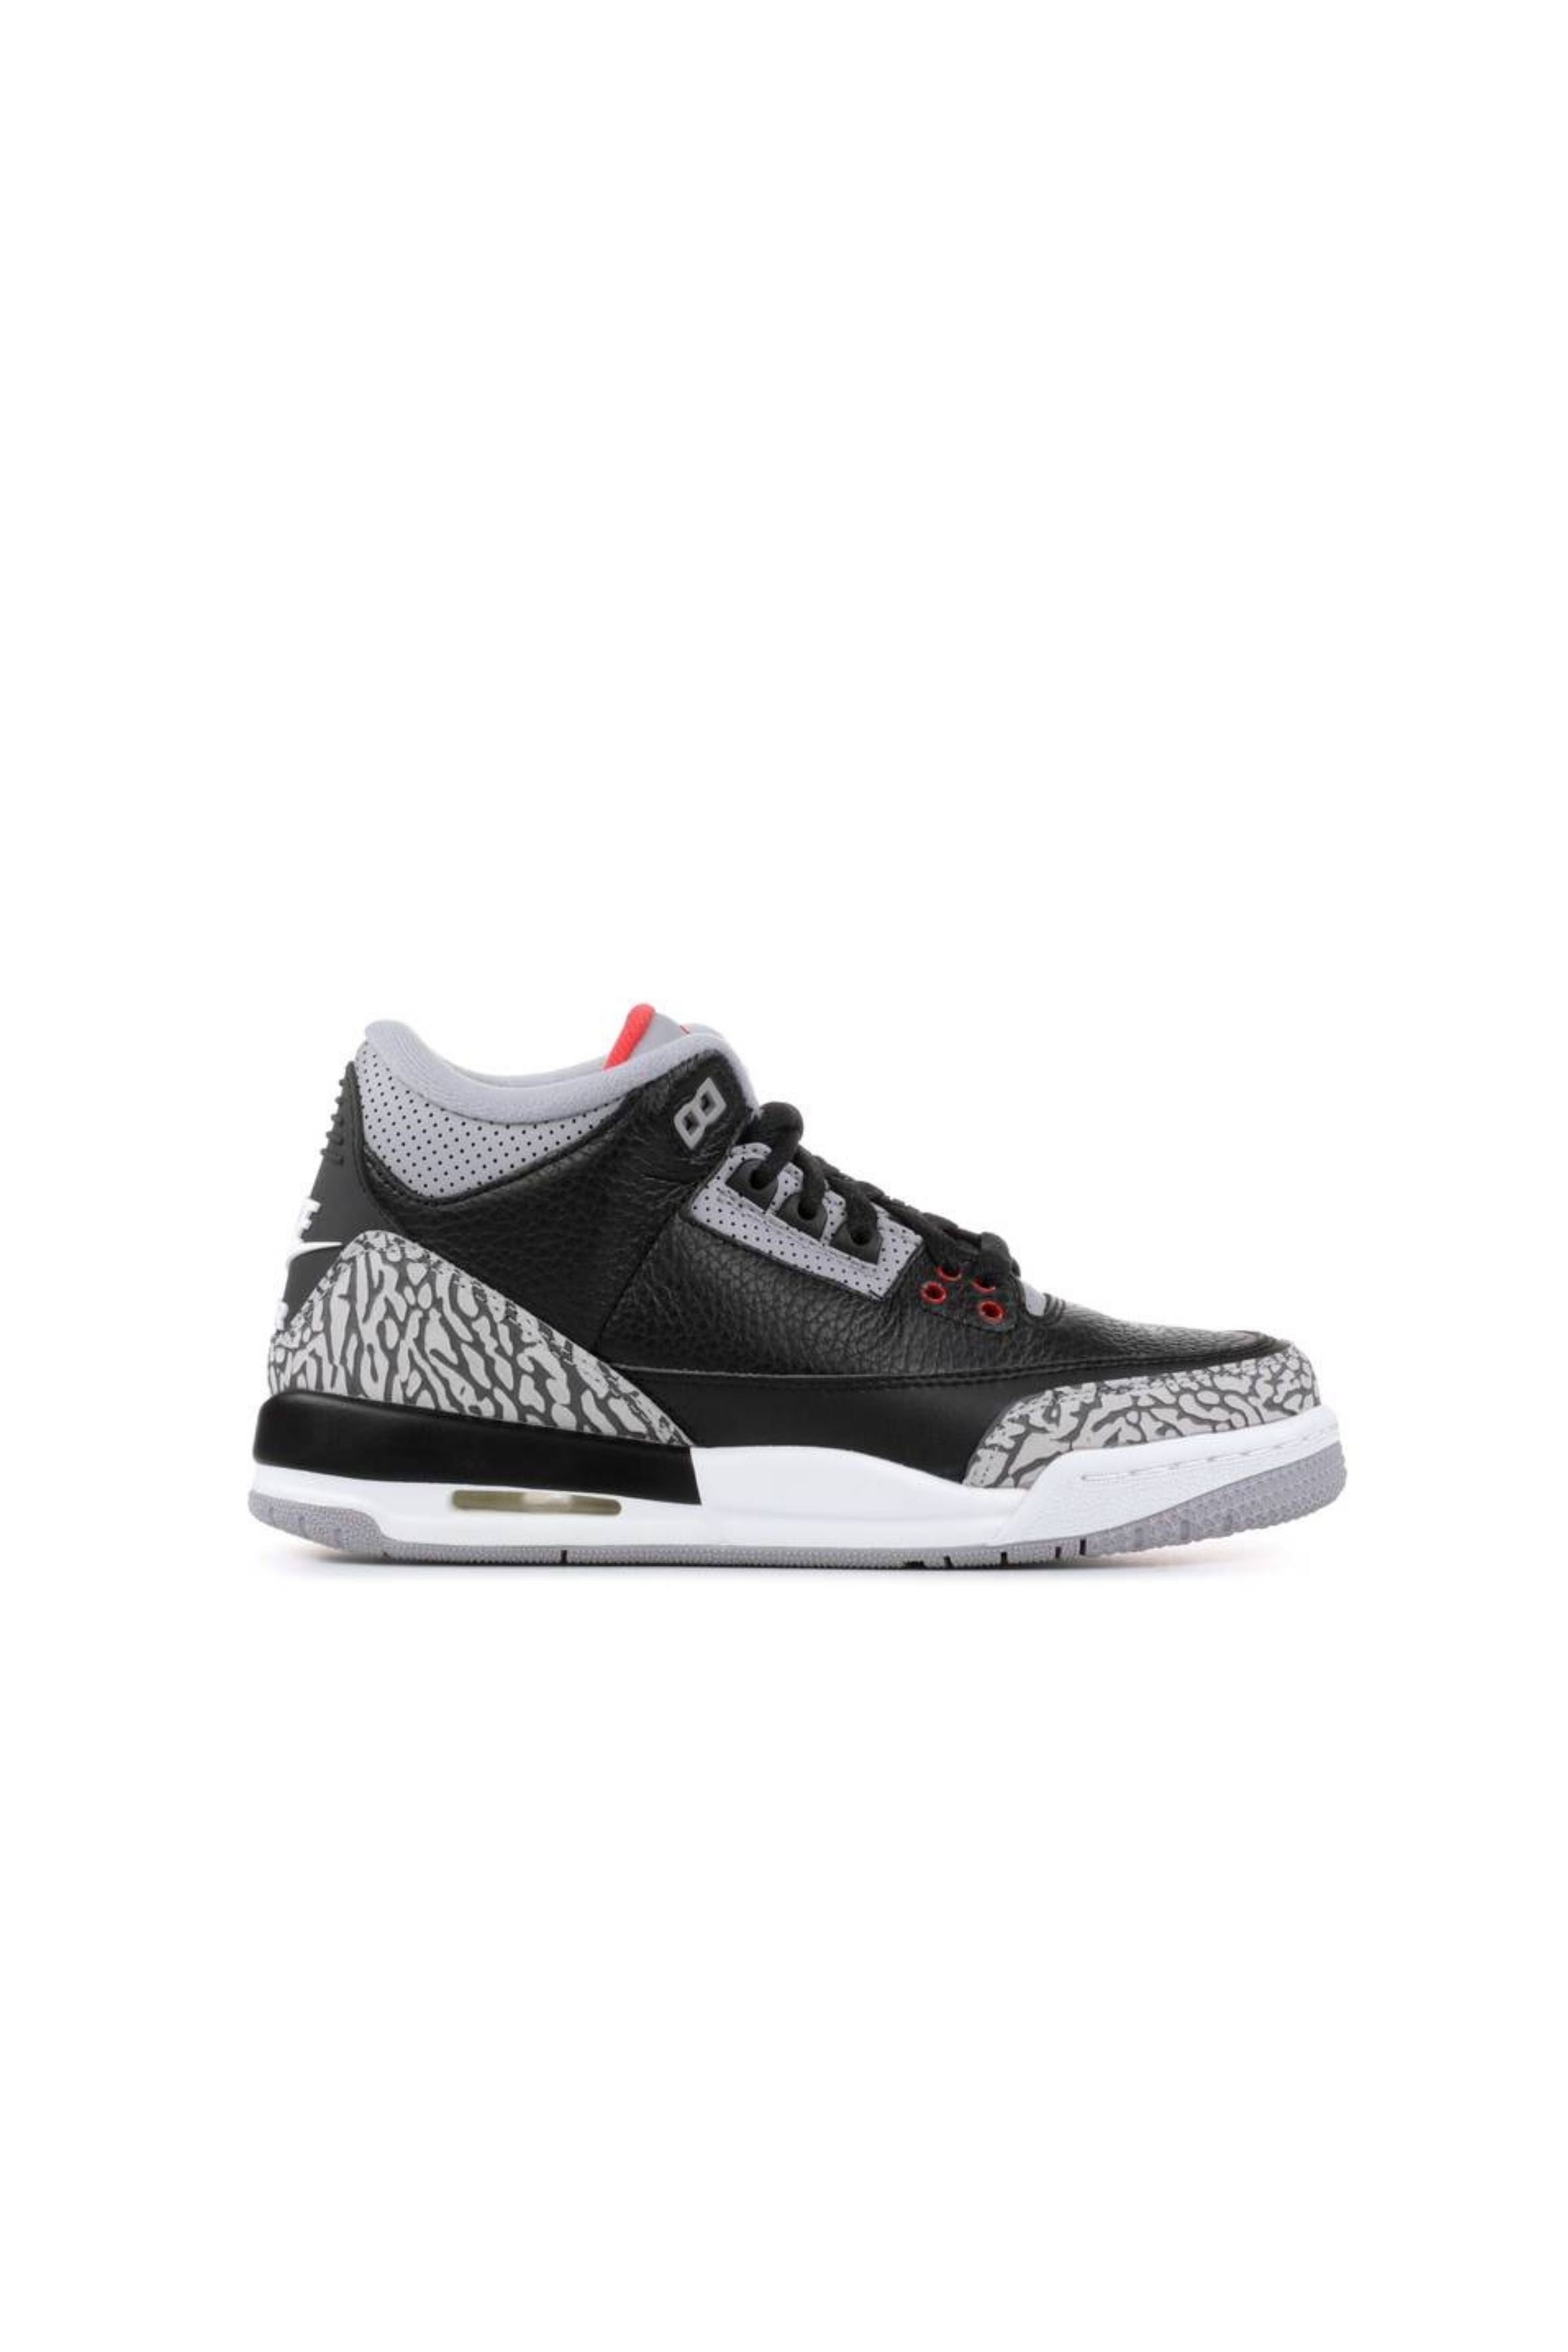 Nike Air Jordan 3 Retro Black/Cement' GS